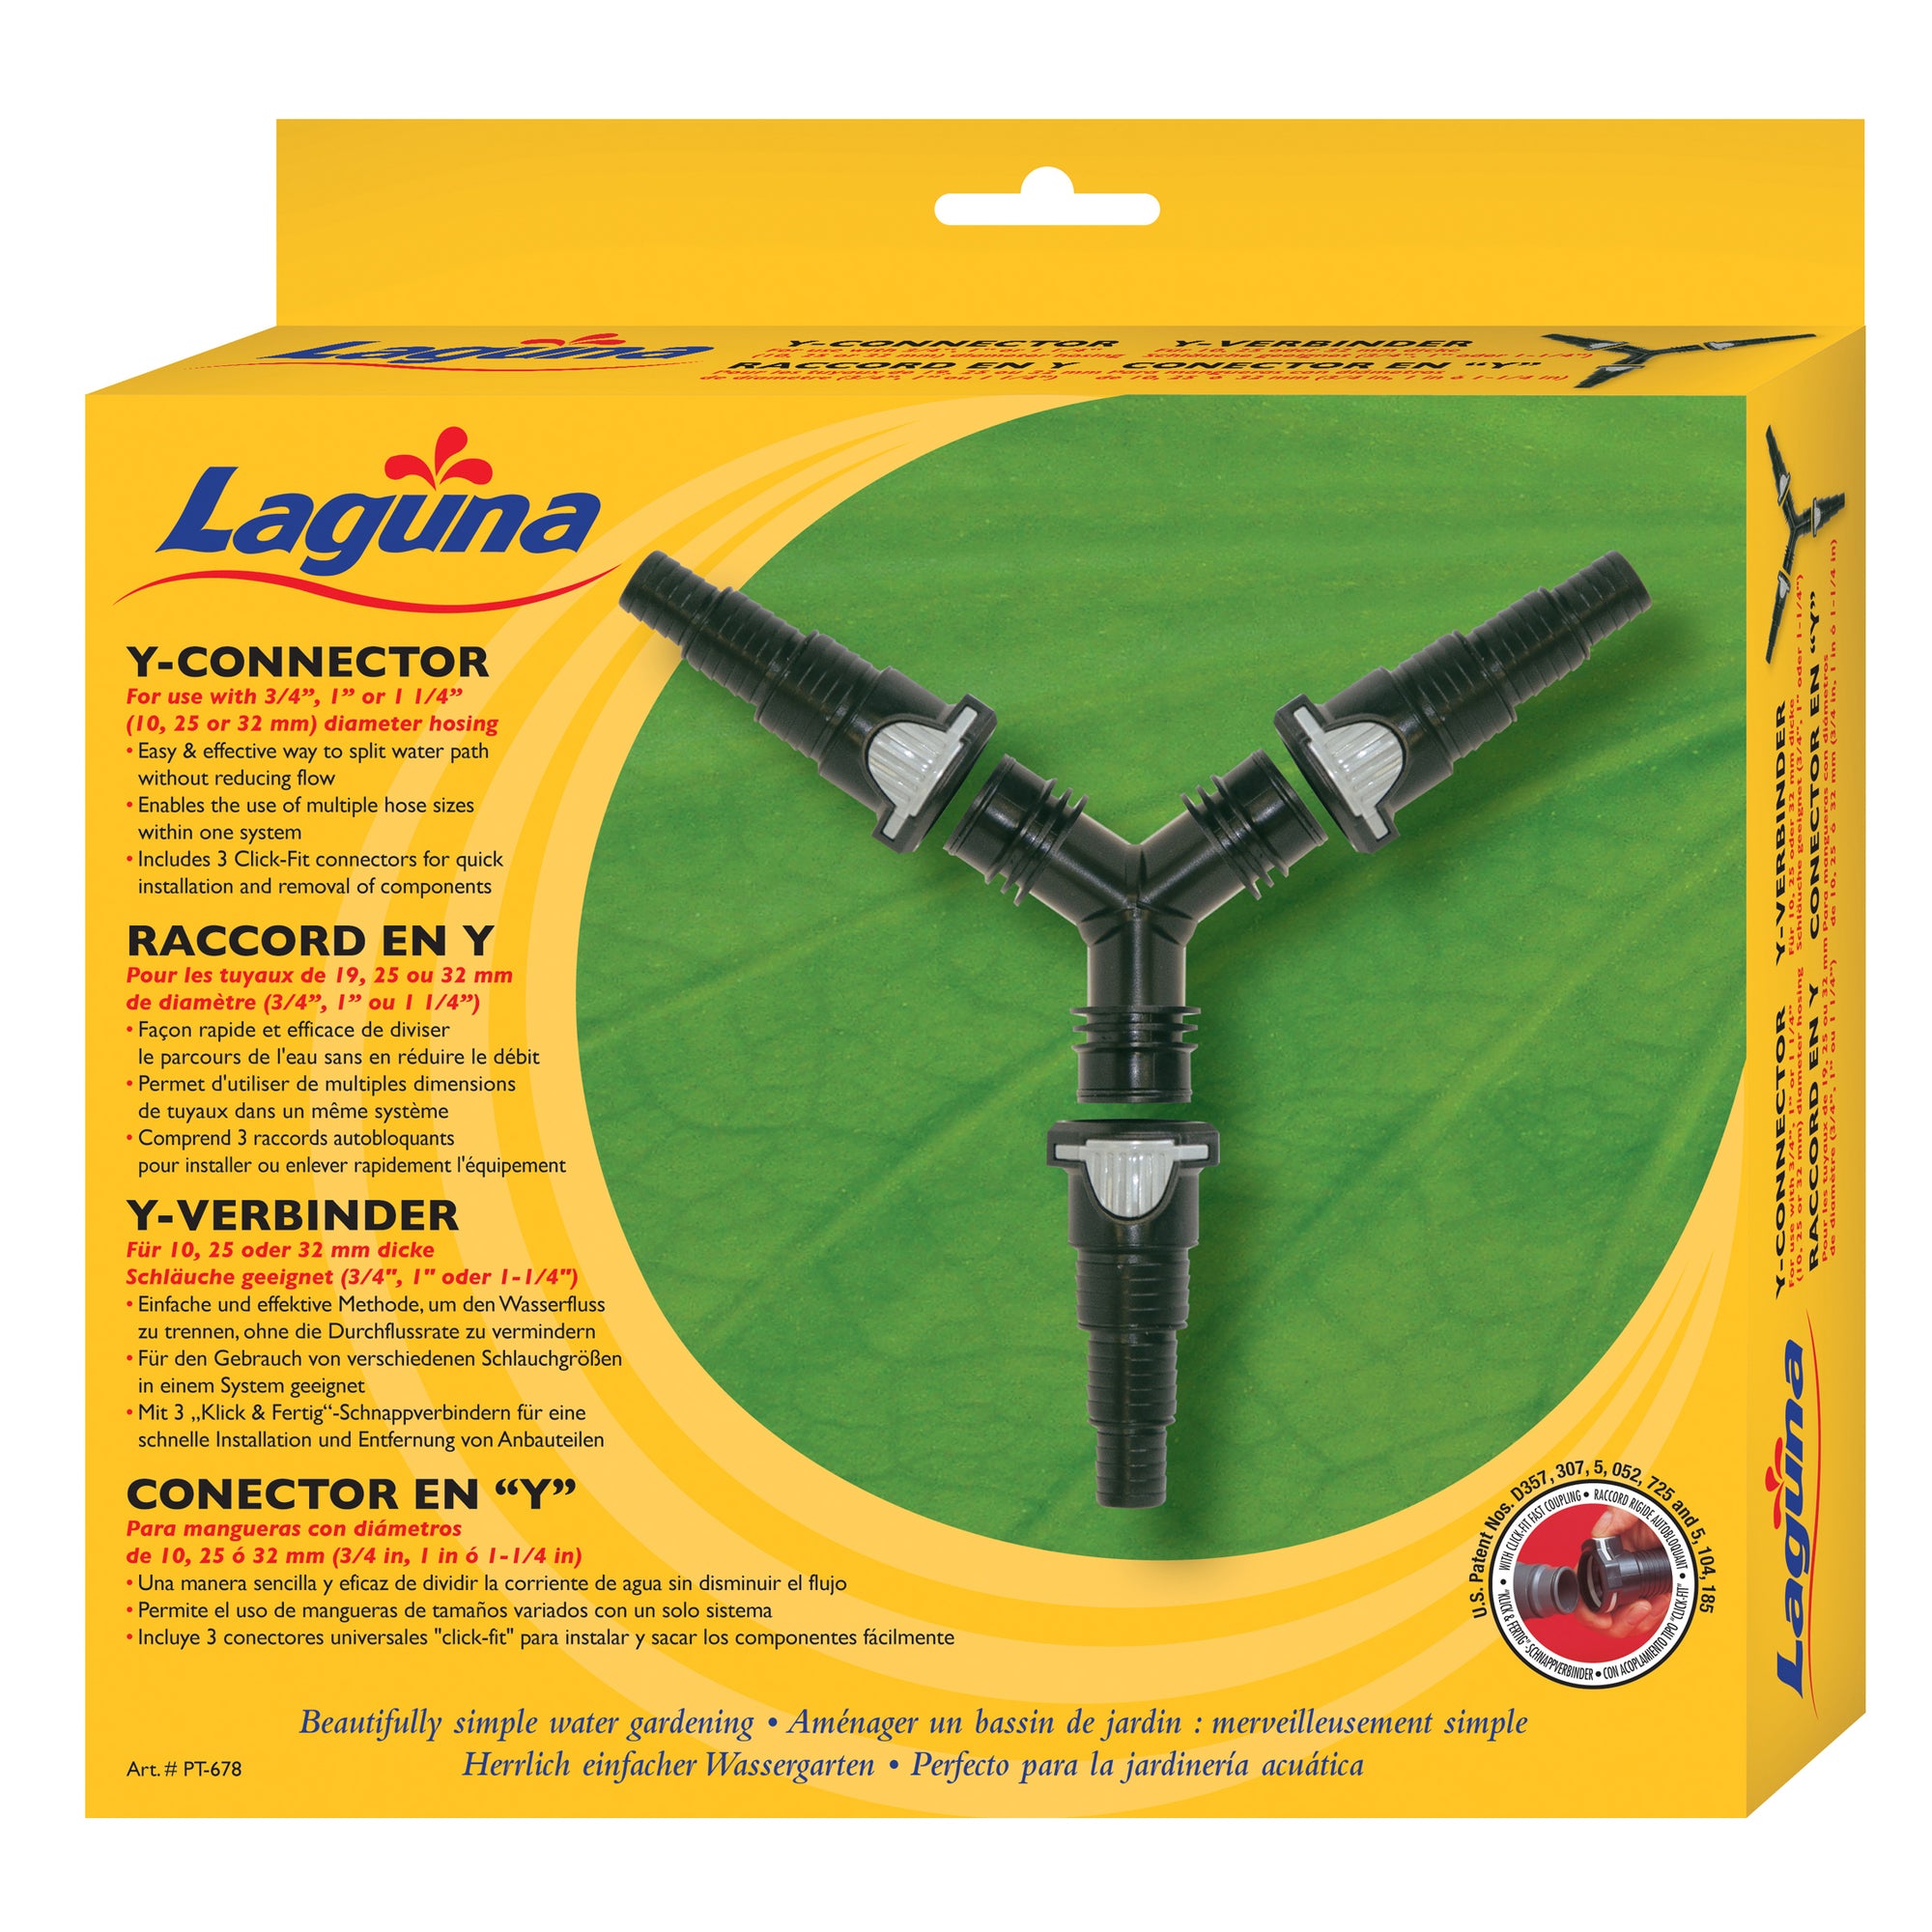 Laguna Y-connector supplied with 3 click-fit connectors - 3.17 cm (1 1/4”)